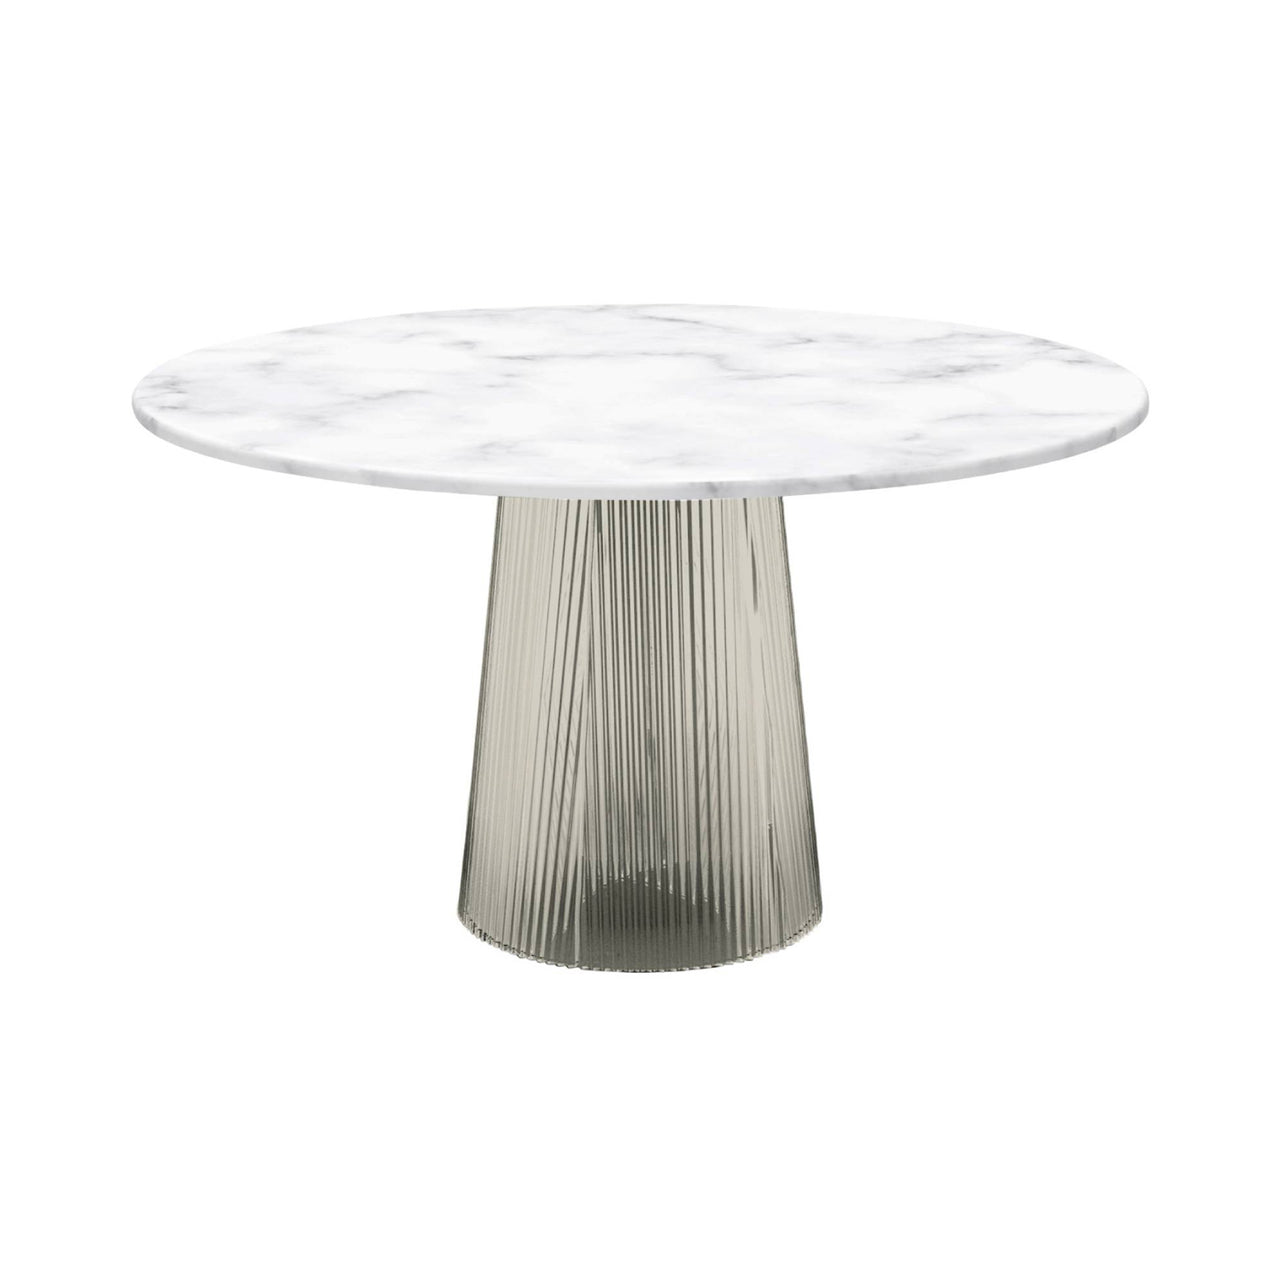 Bent Dining Table: White + Smoky Grey